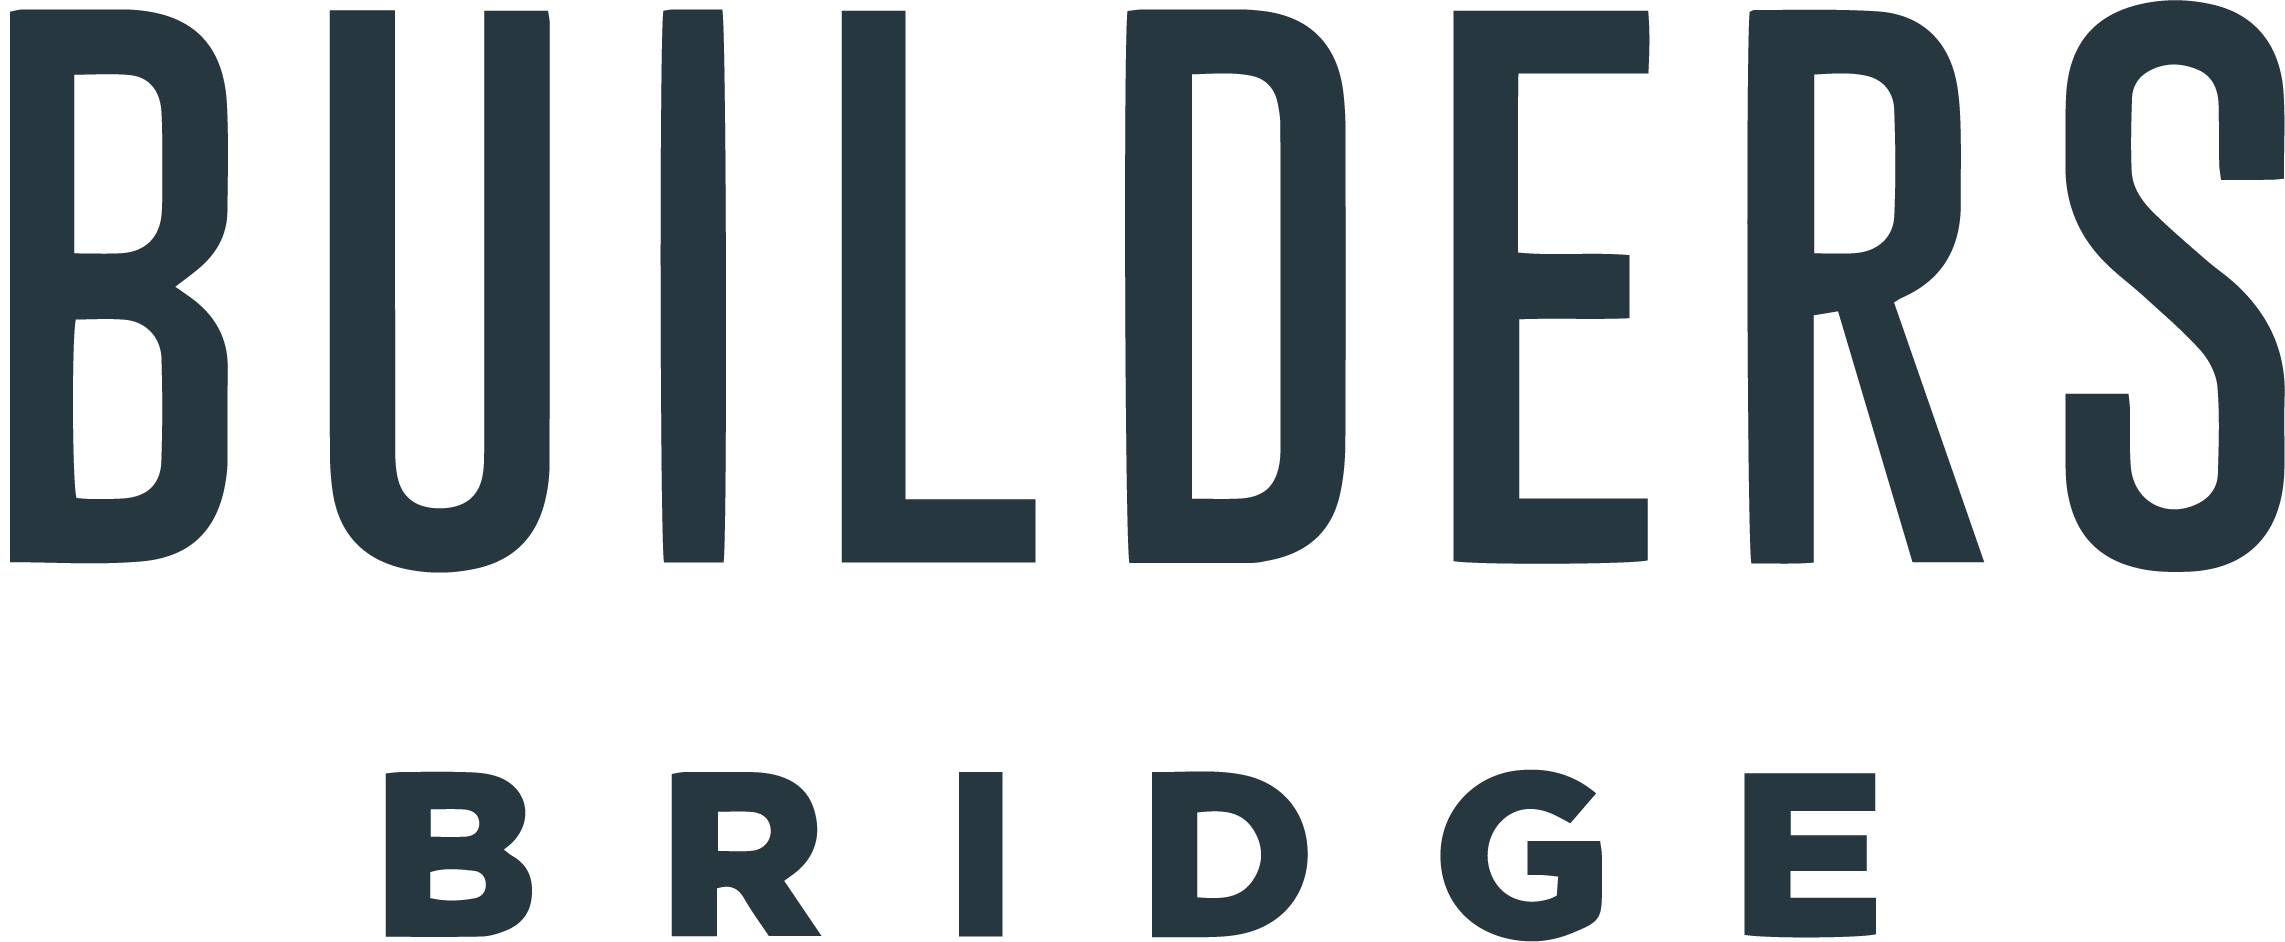 Builders Bridge